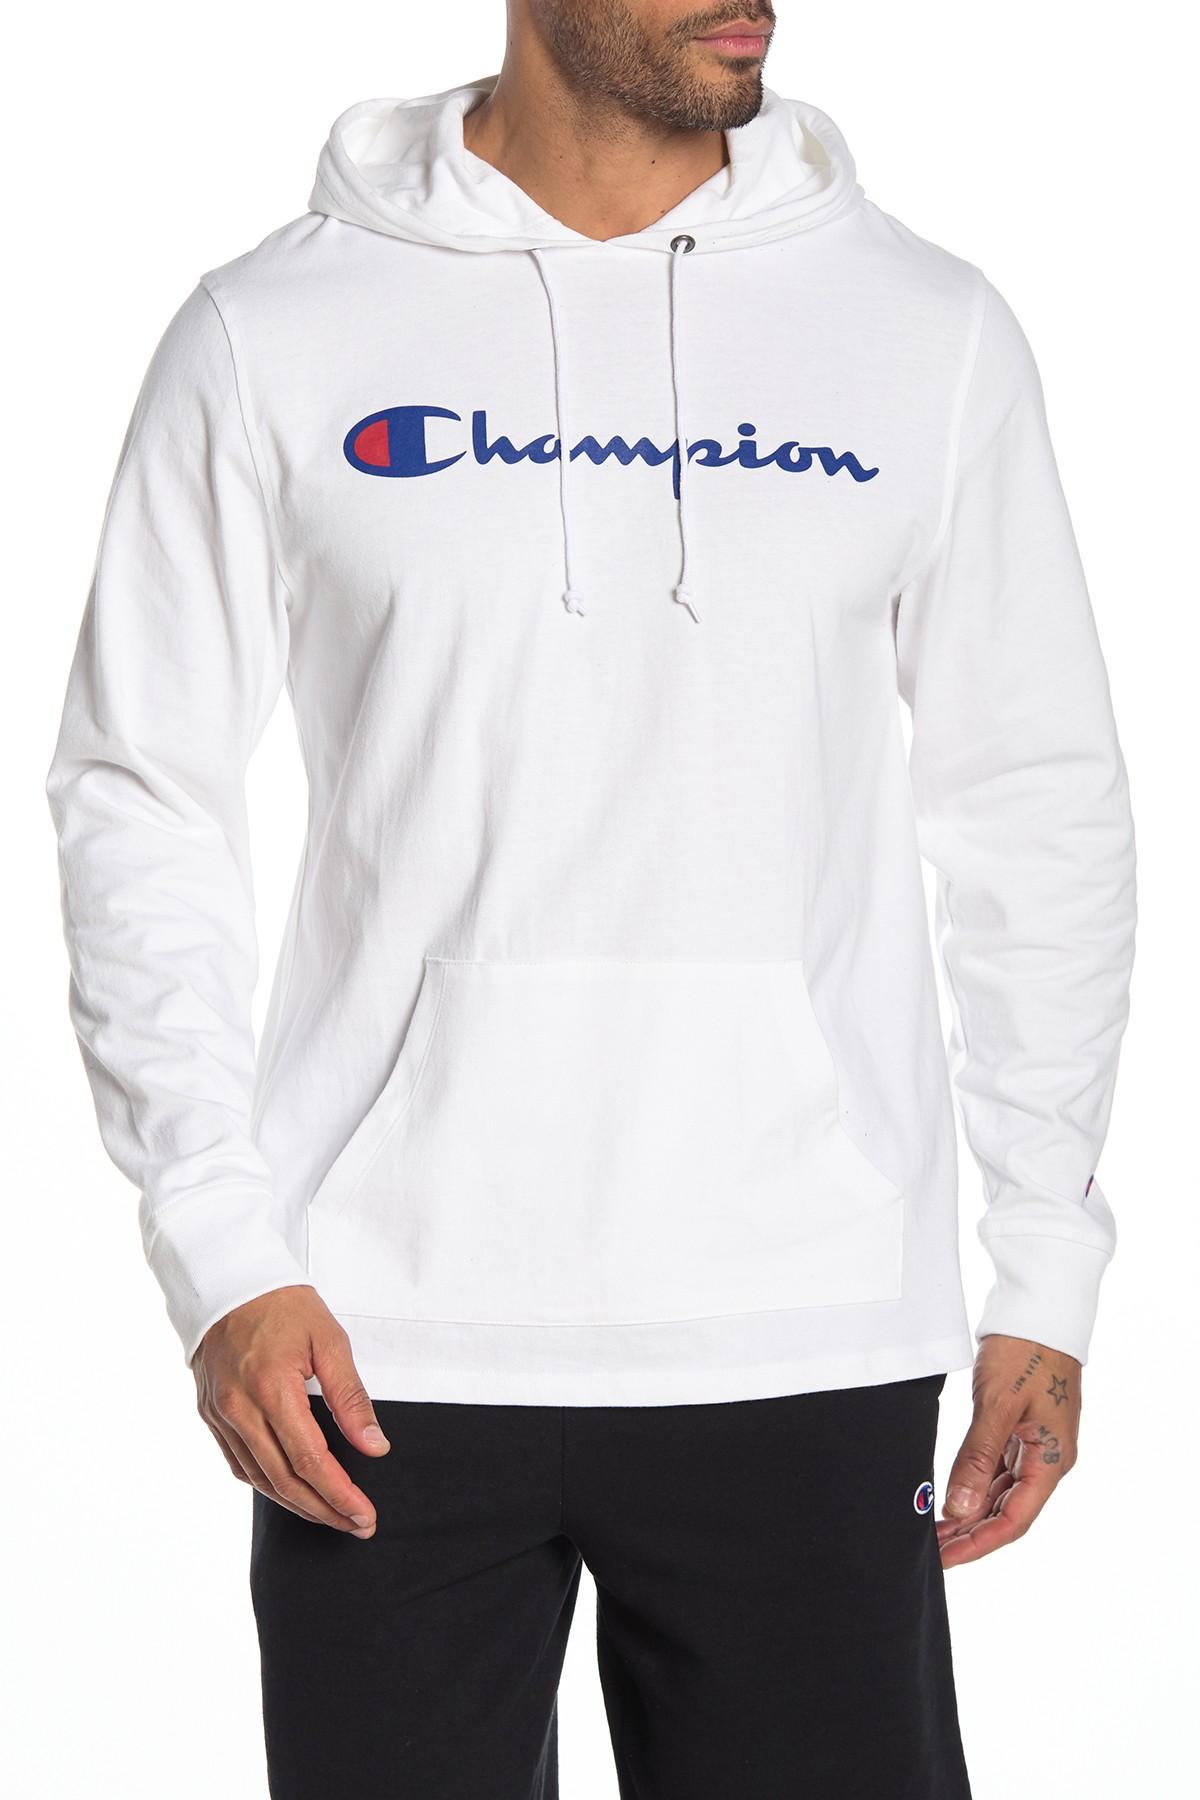 Champion Logo Hooded Sweatshirt in White for Men - Lyst